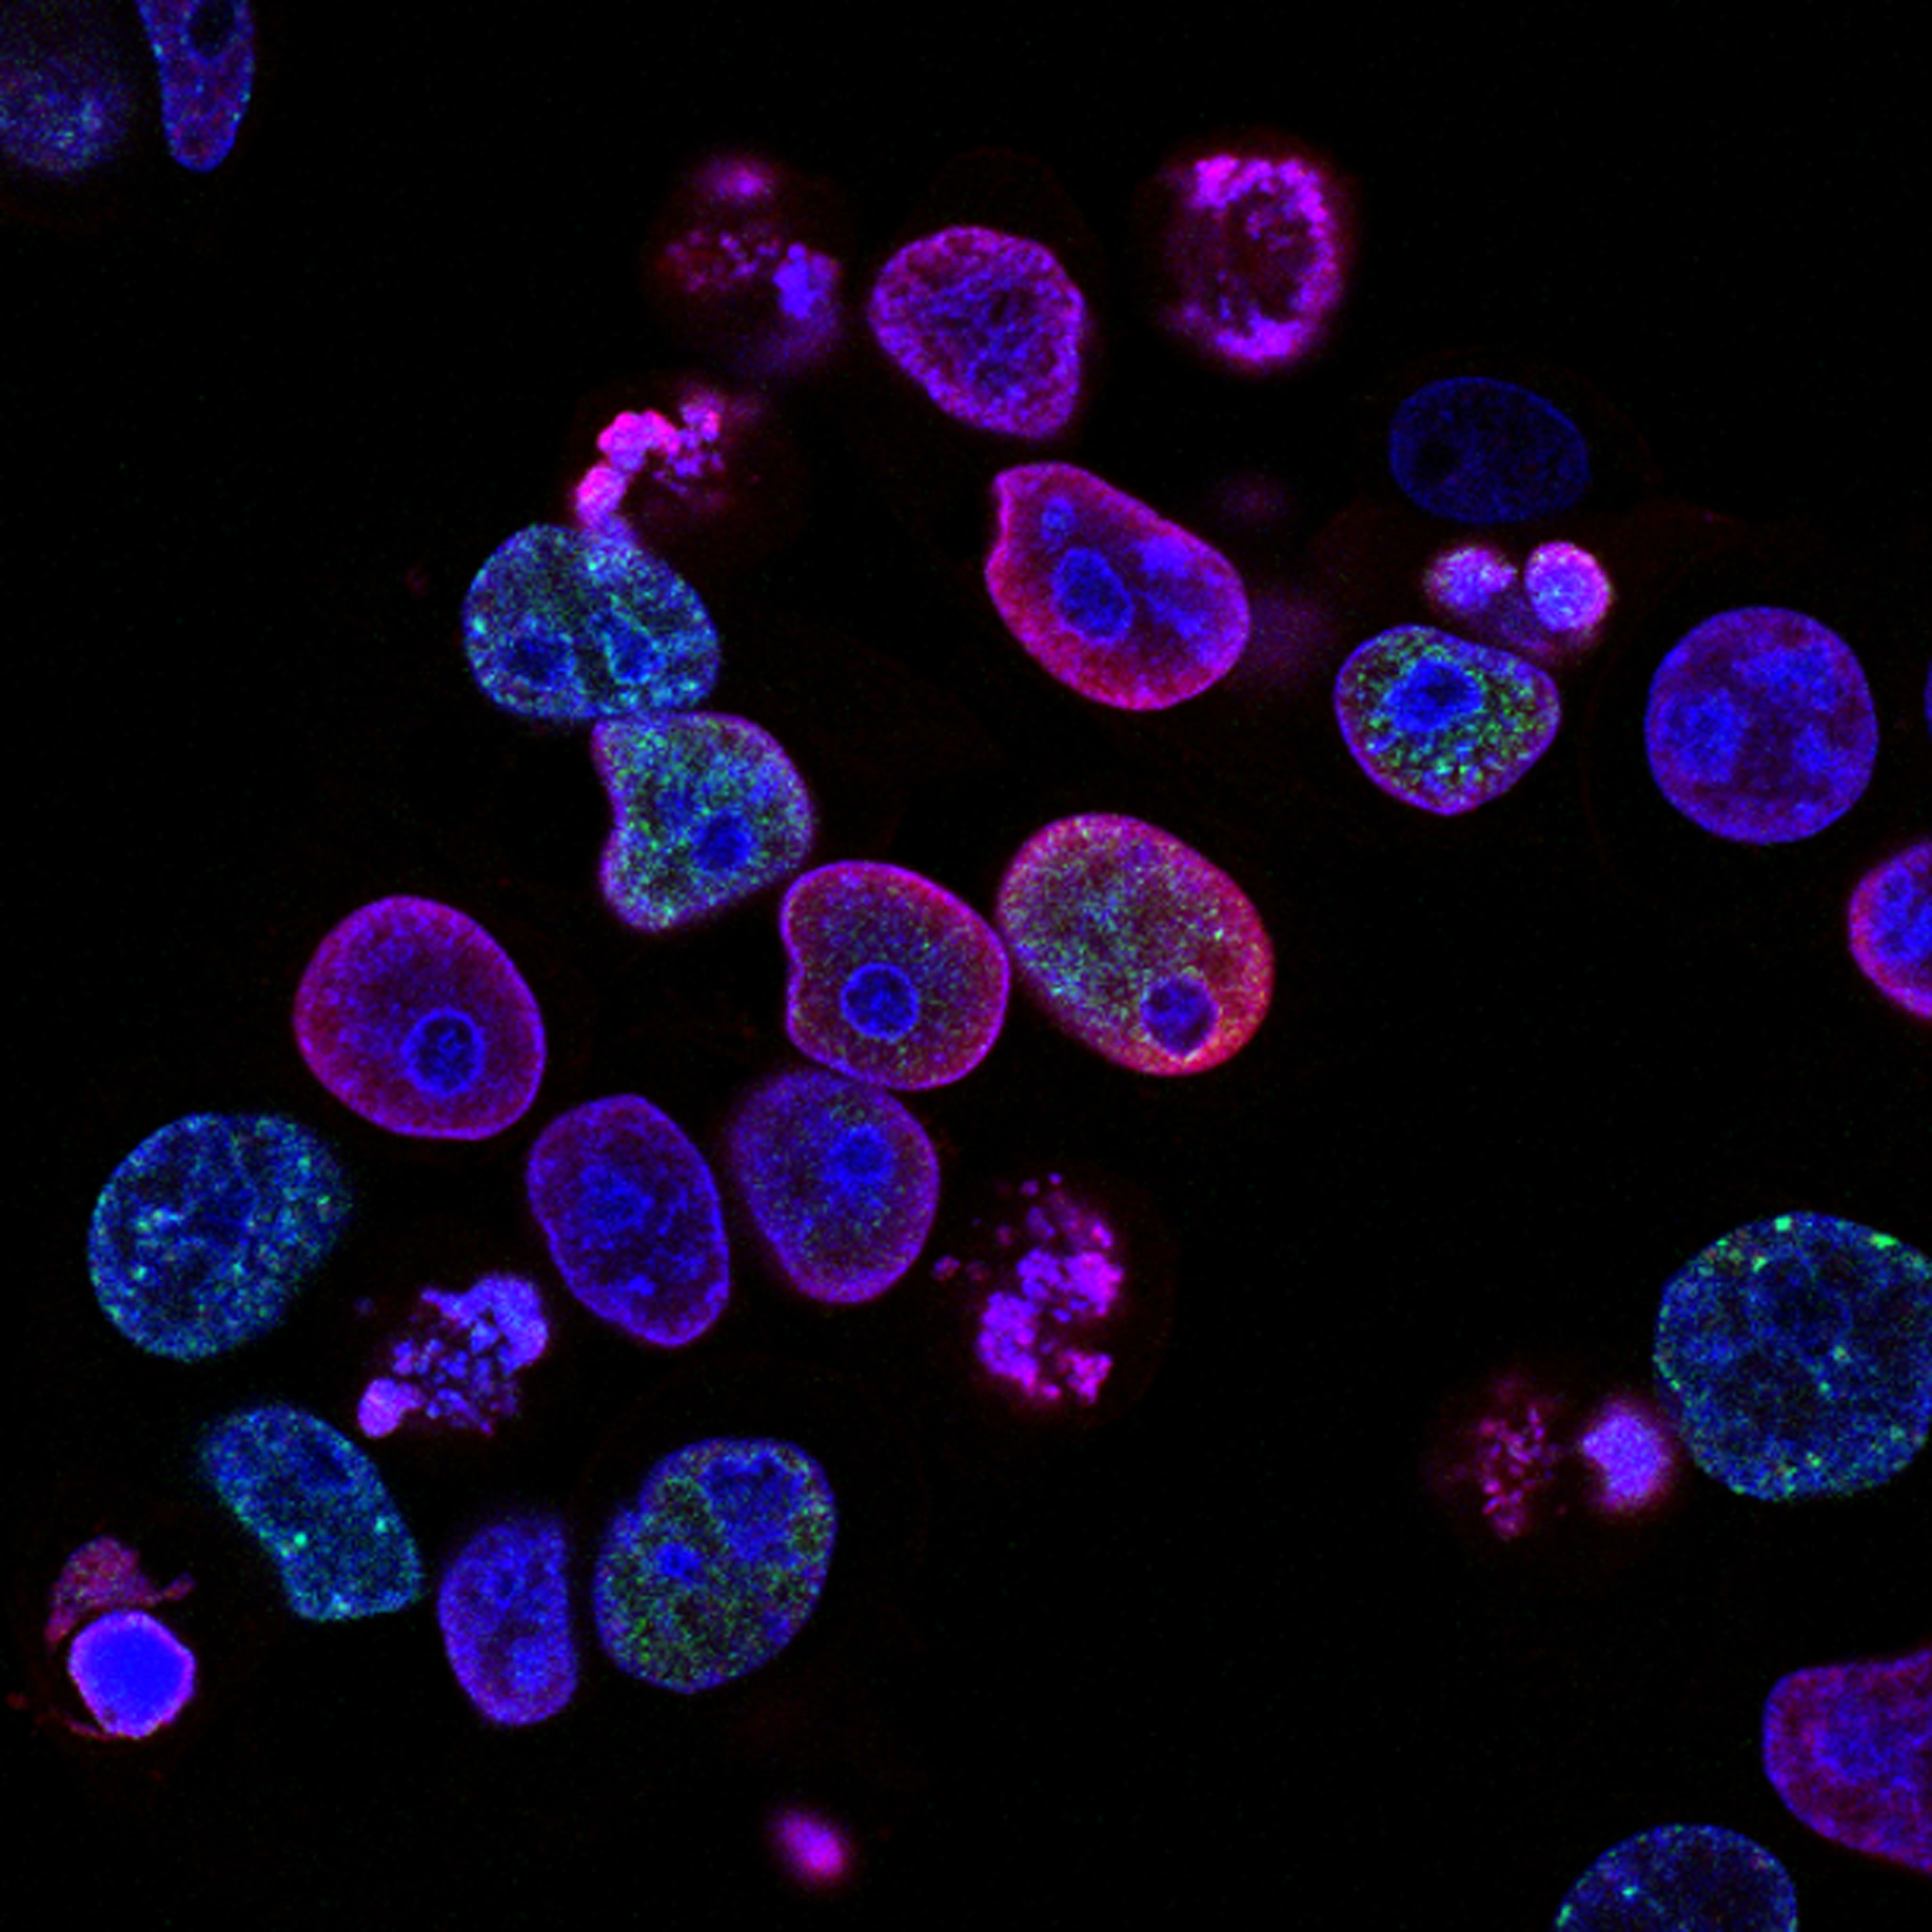 Imagen de microscopio de células cancerosas